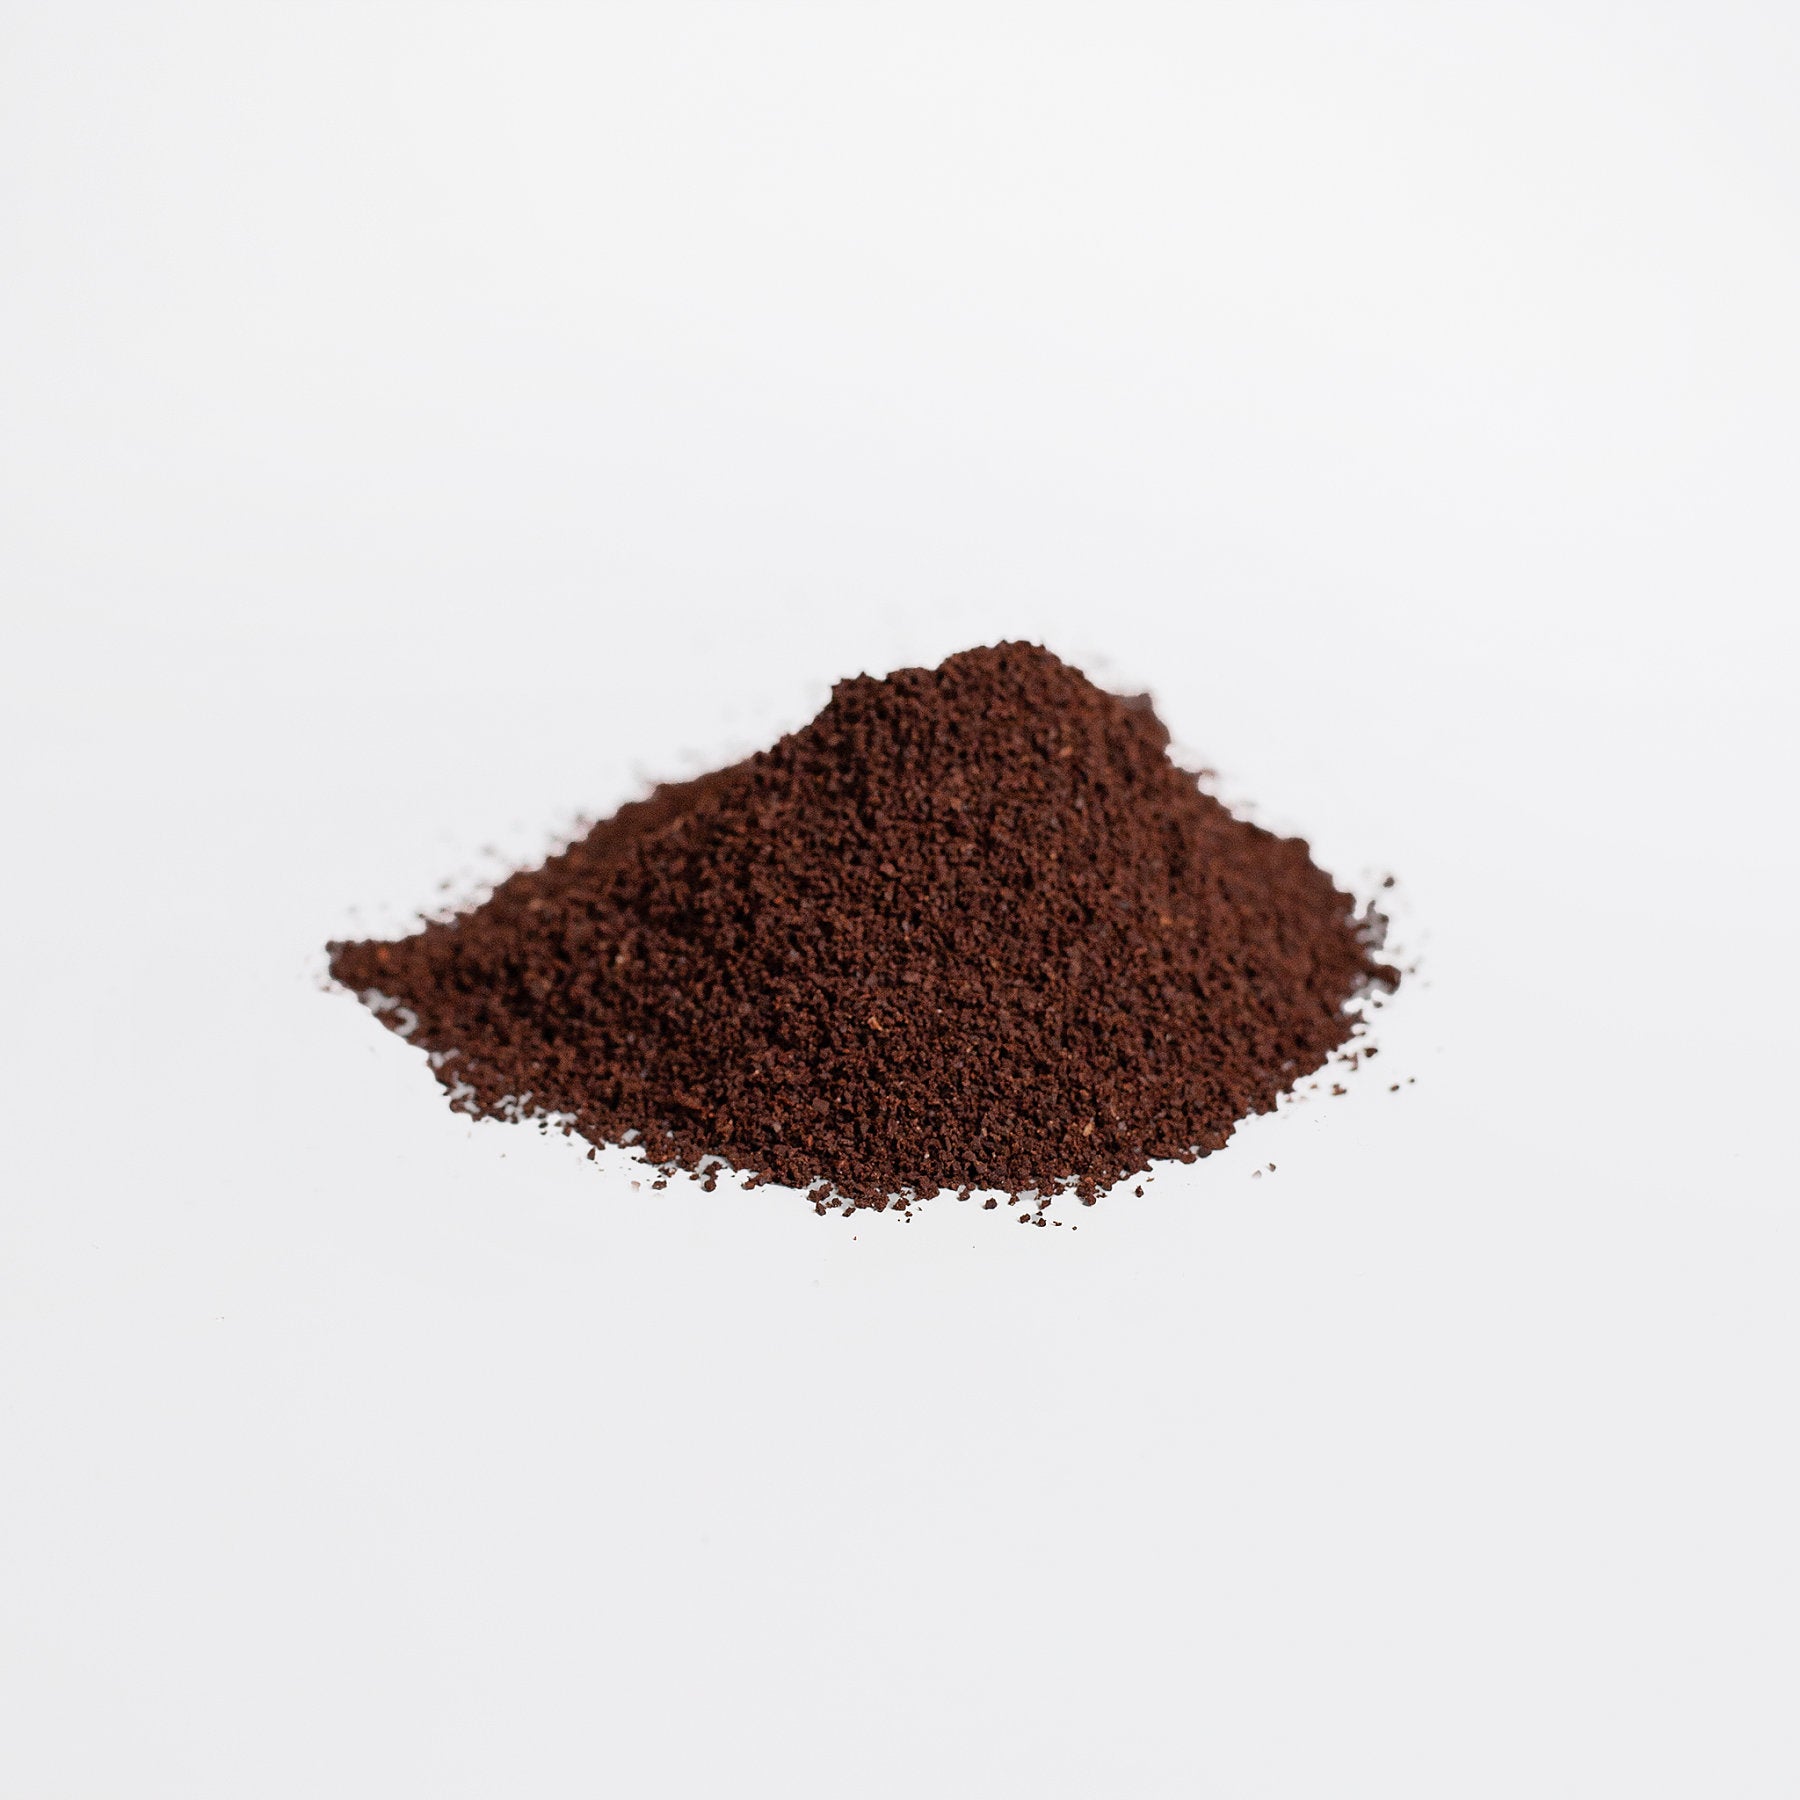 OBEASY™ Organic Hemp Coffee Blend - Medium Roast 4oz